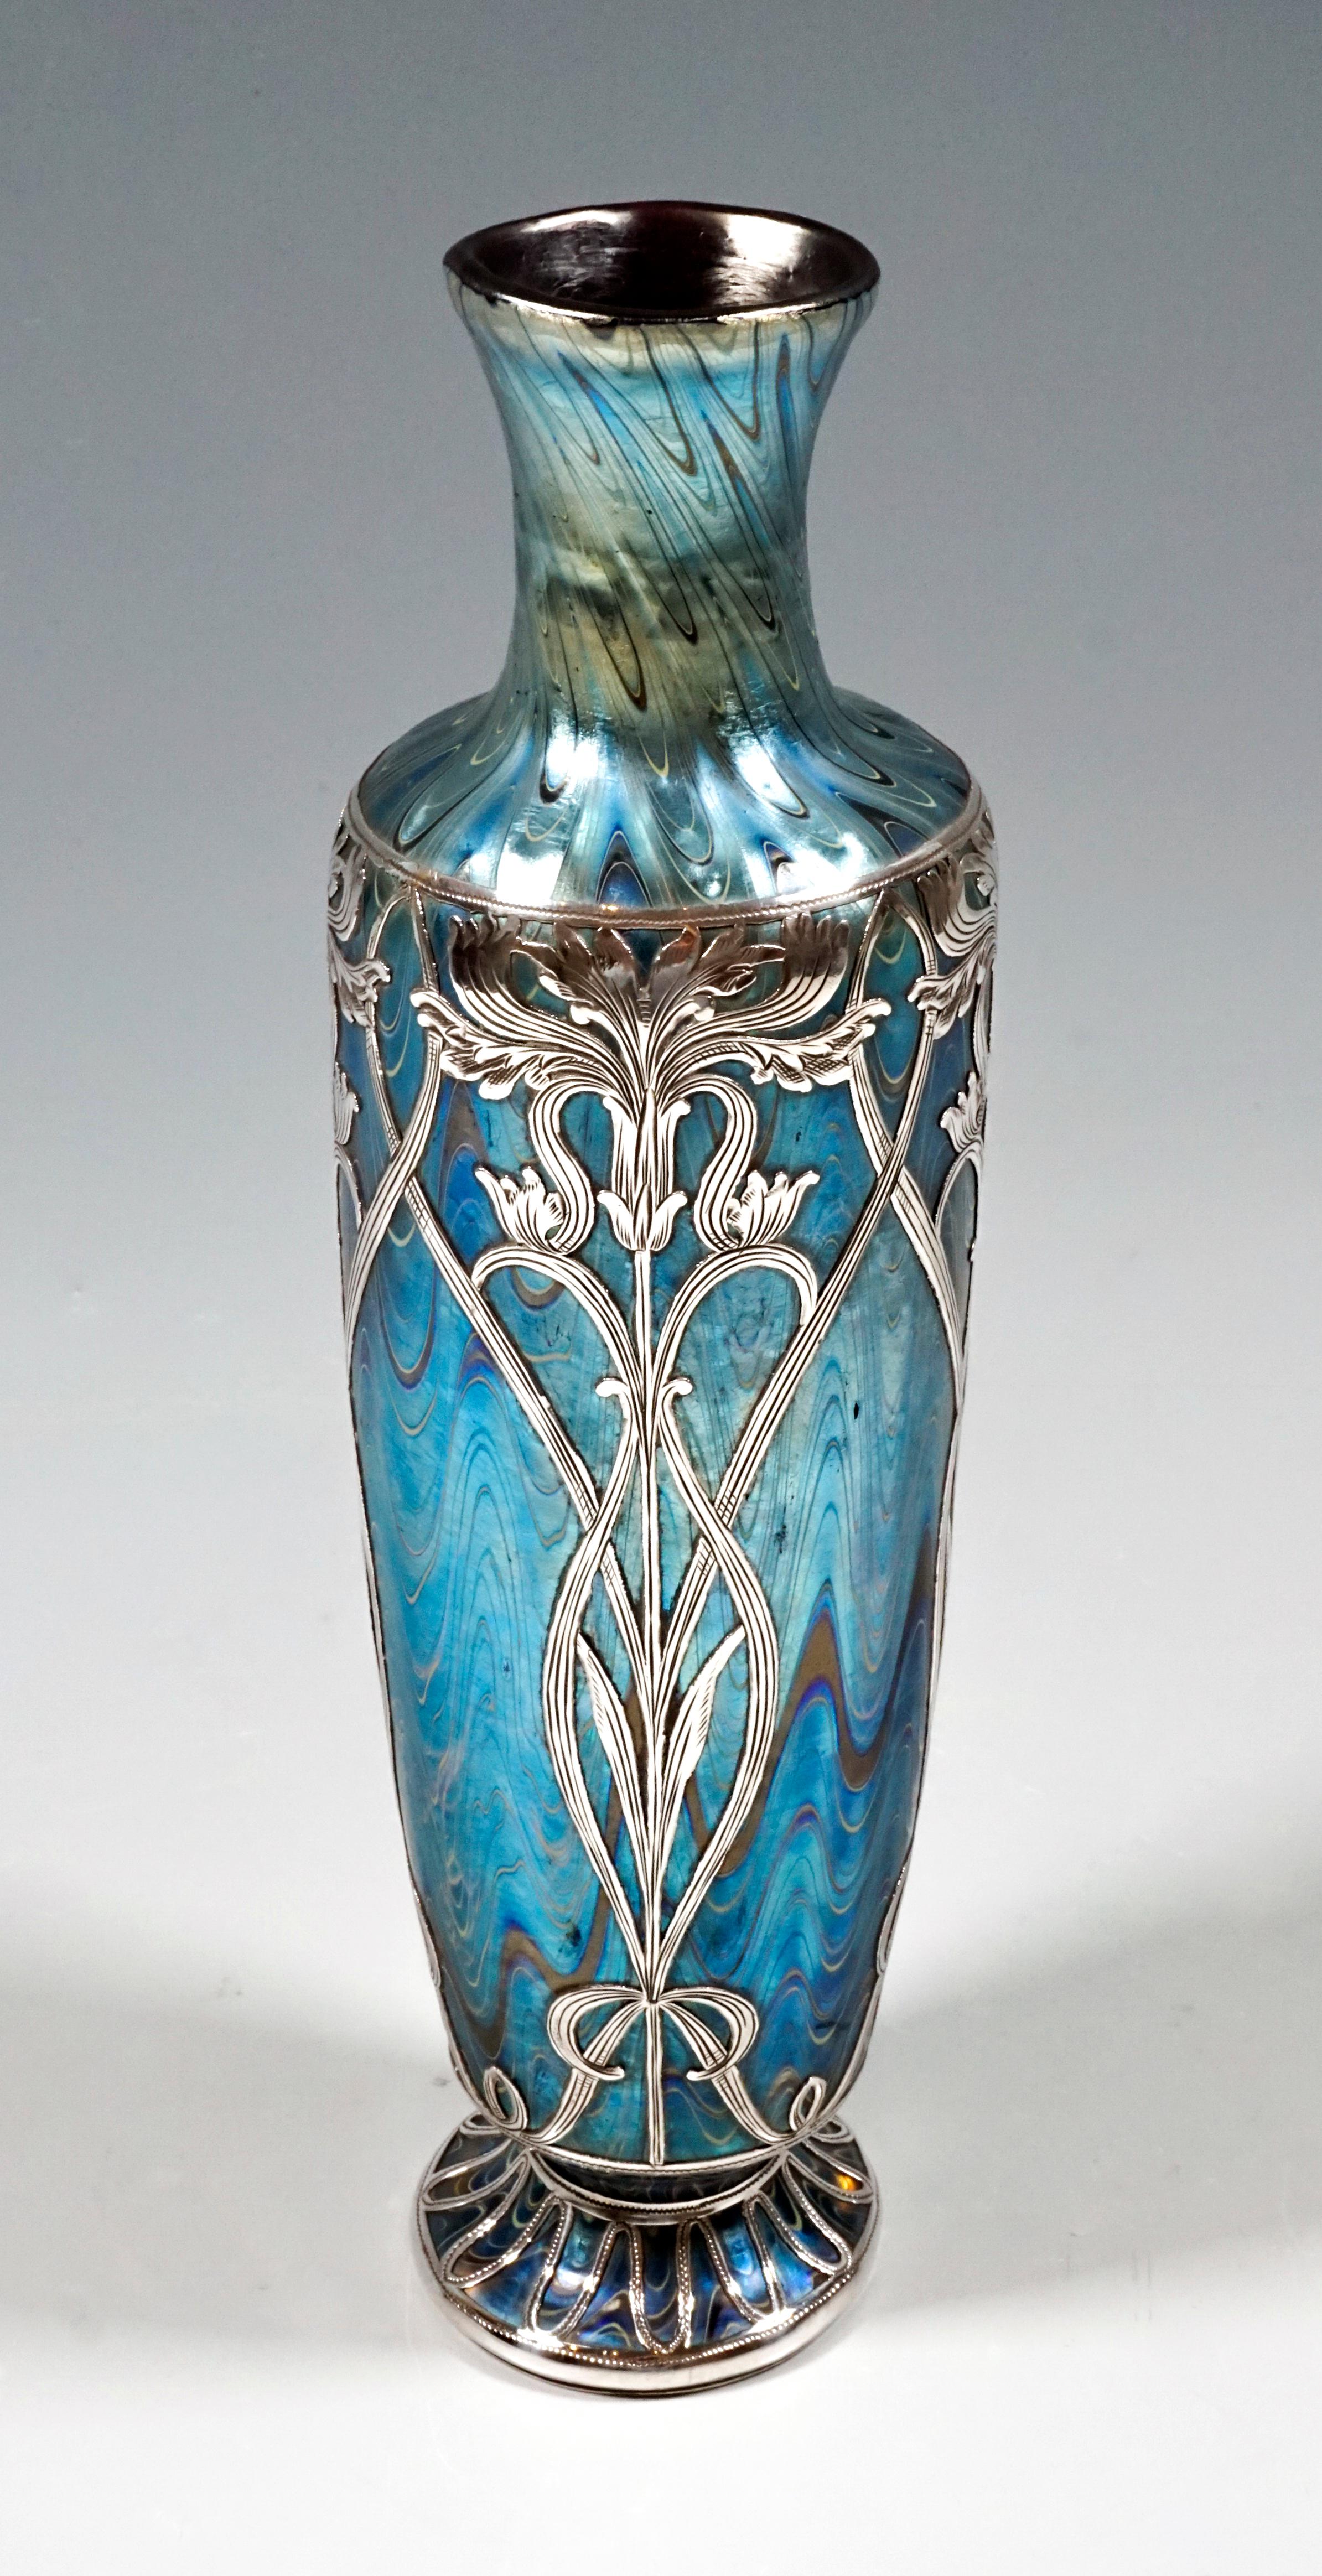 Austrian Loetz Art Nouveau Vase Phenomenon Genre Ruby 6893 with Silver Overlay circa 1899